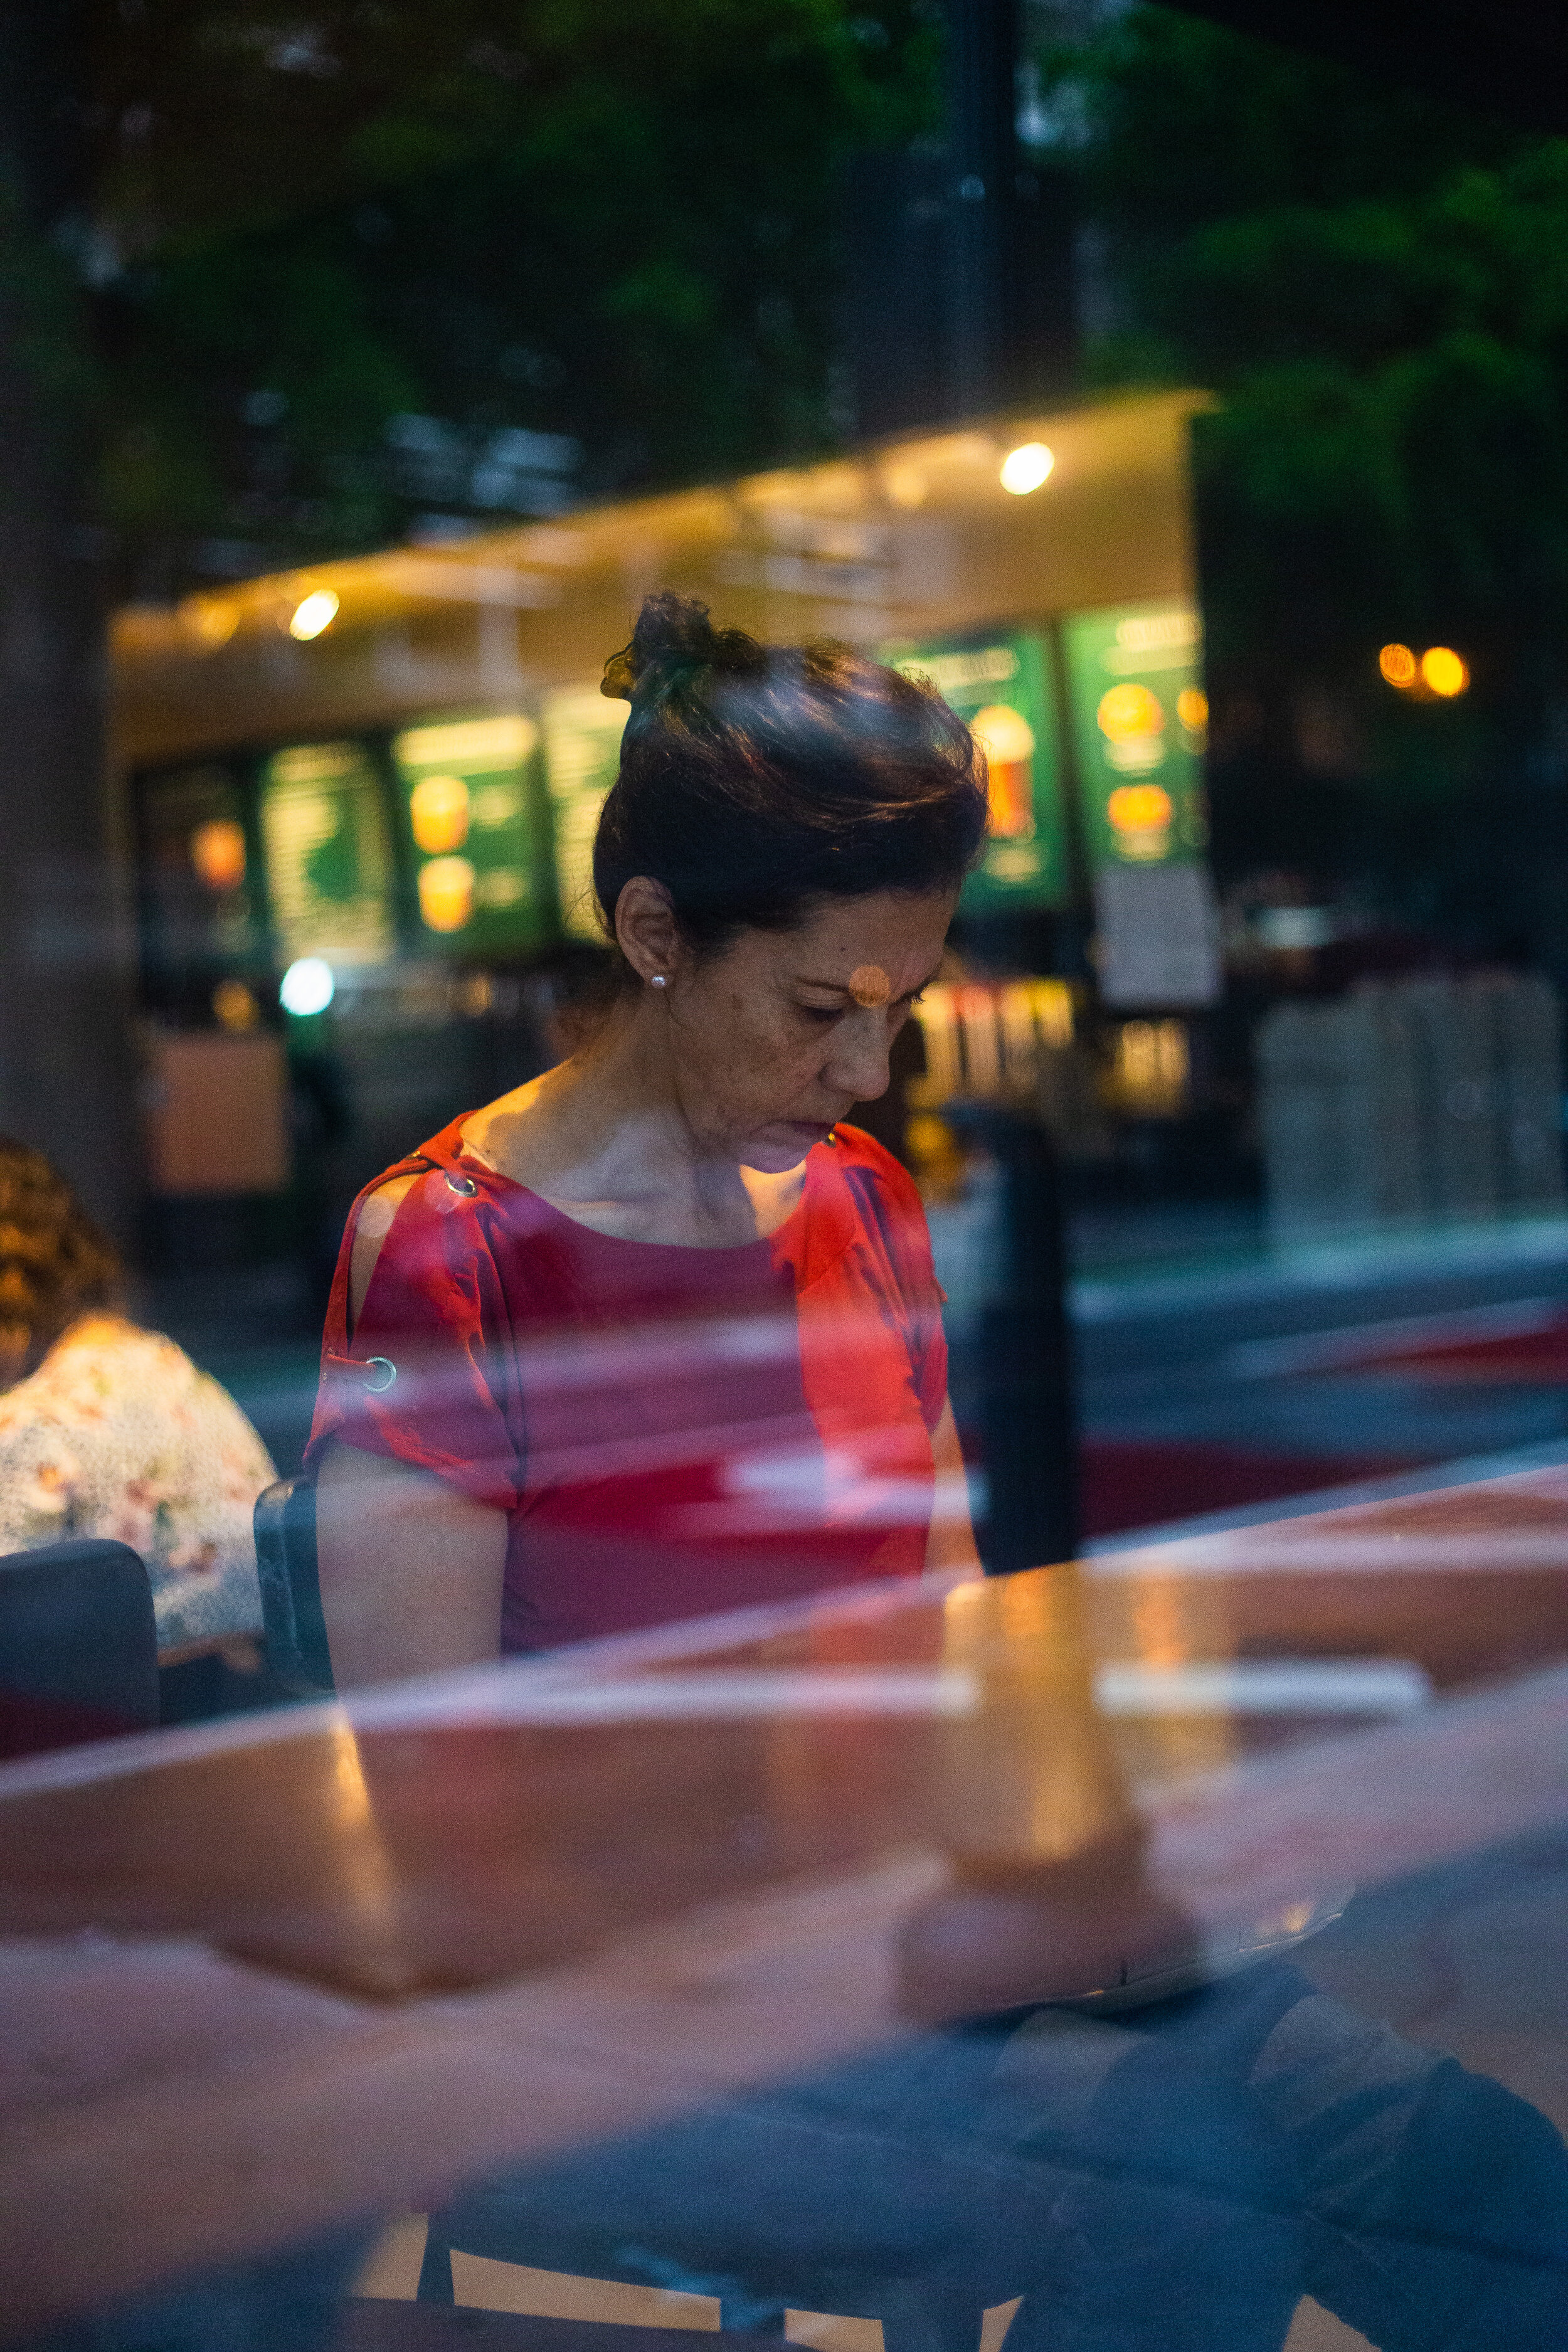 Woman red shirt-Starbucks window-.jpg